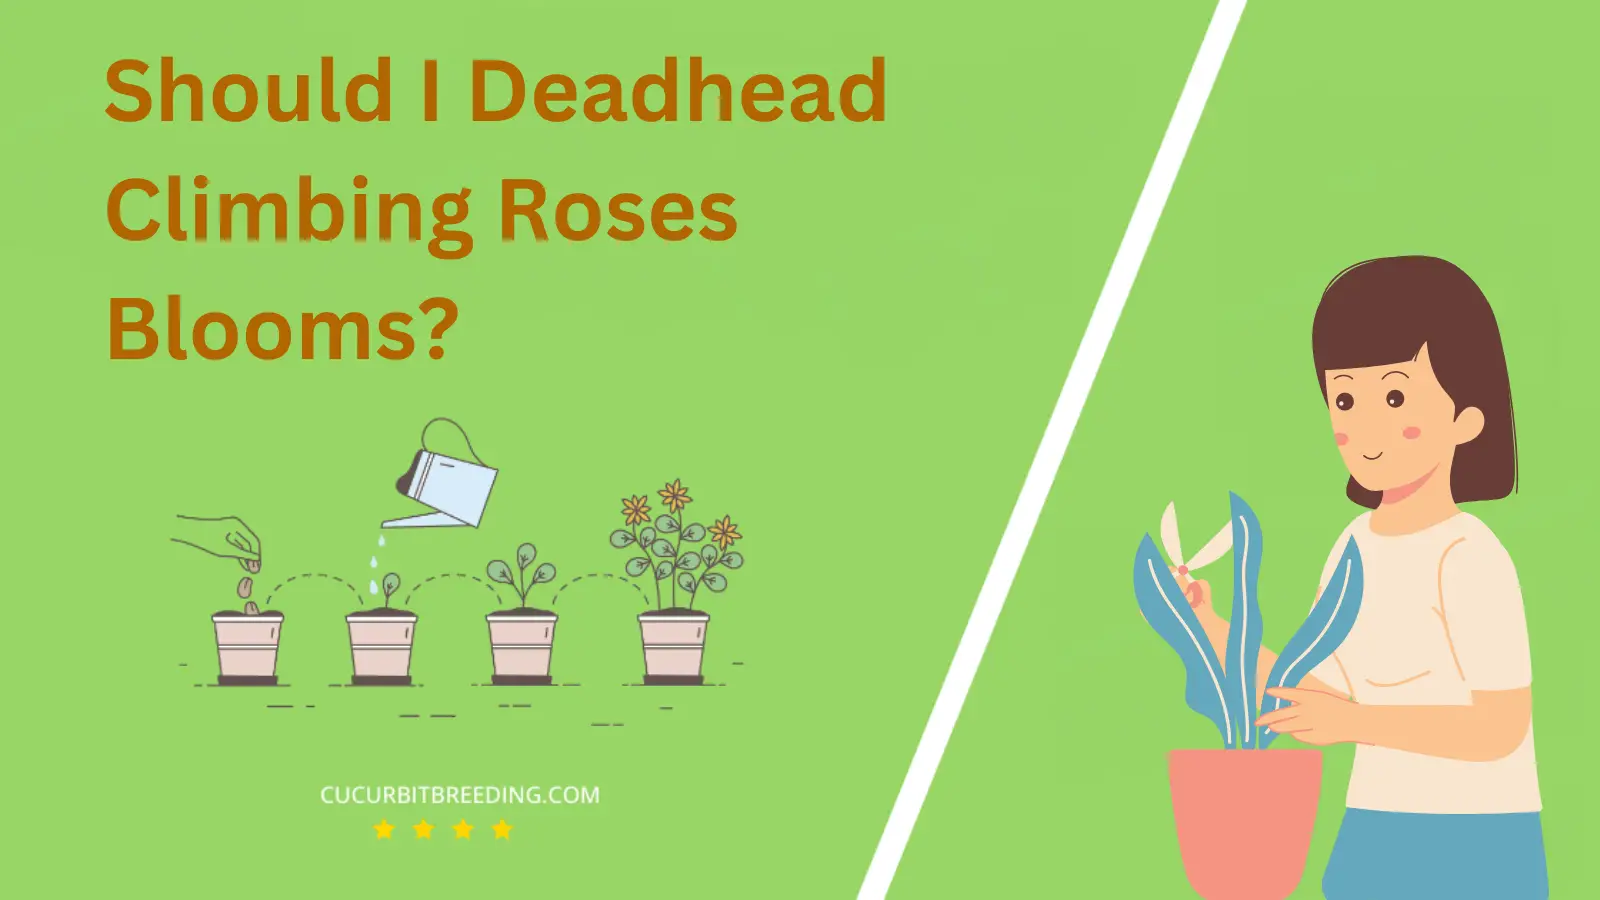 Should I Deadhead Climbing Roses Blooms?